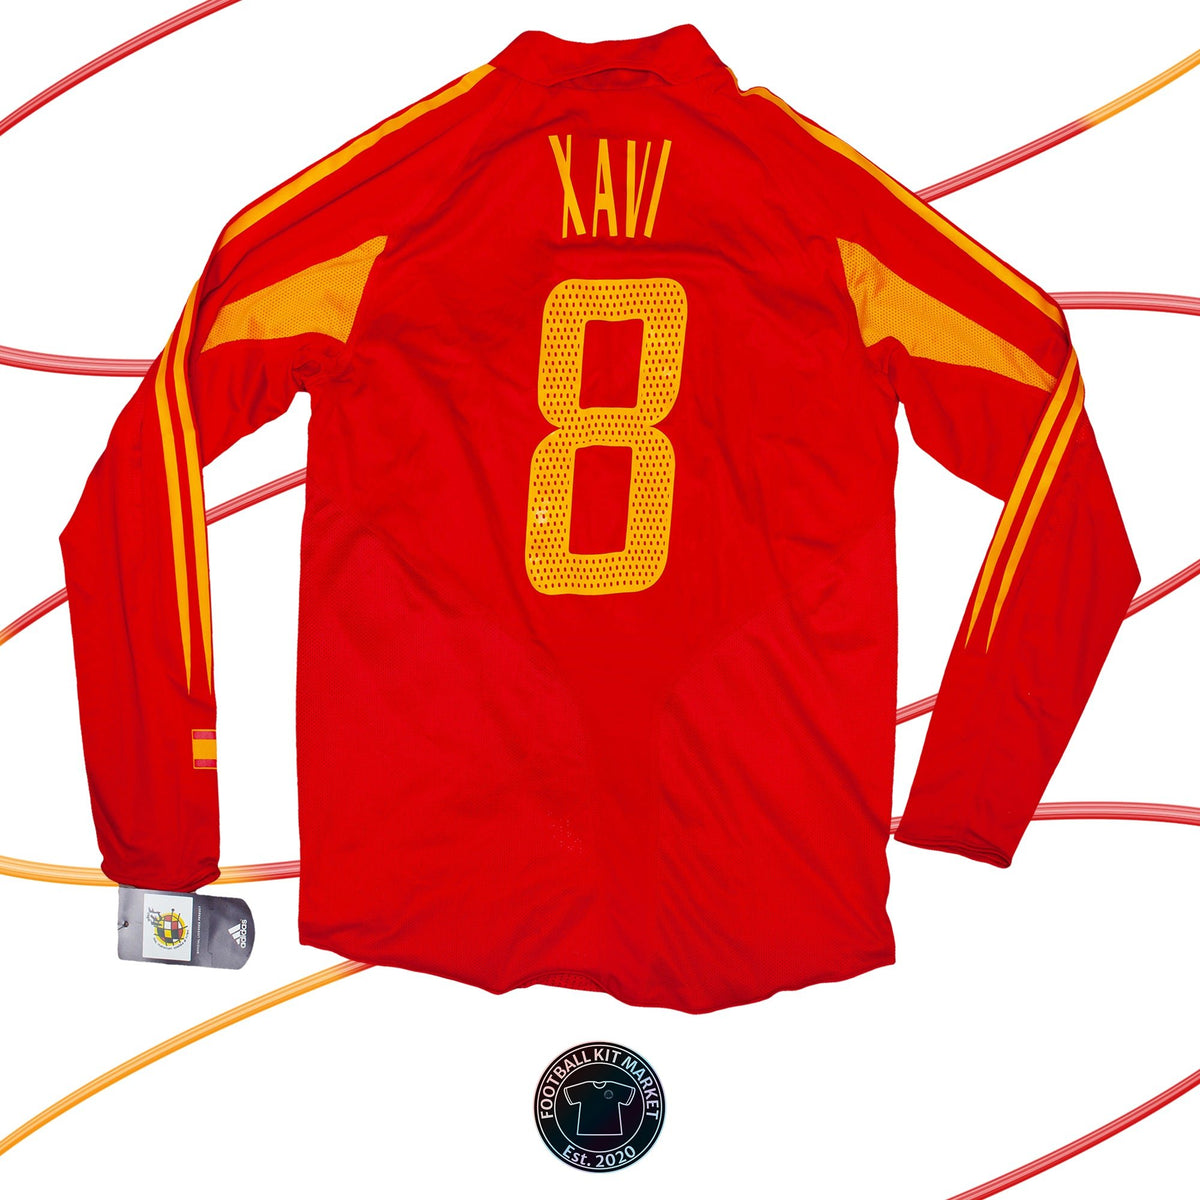 Genuine SPAIN Home XAVI (2004-2006) - ADIDAS (M) - Product Image from Football Kit Market